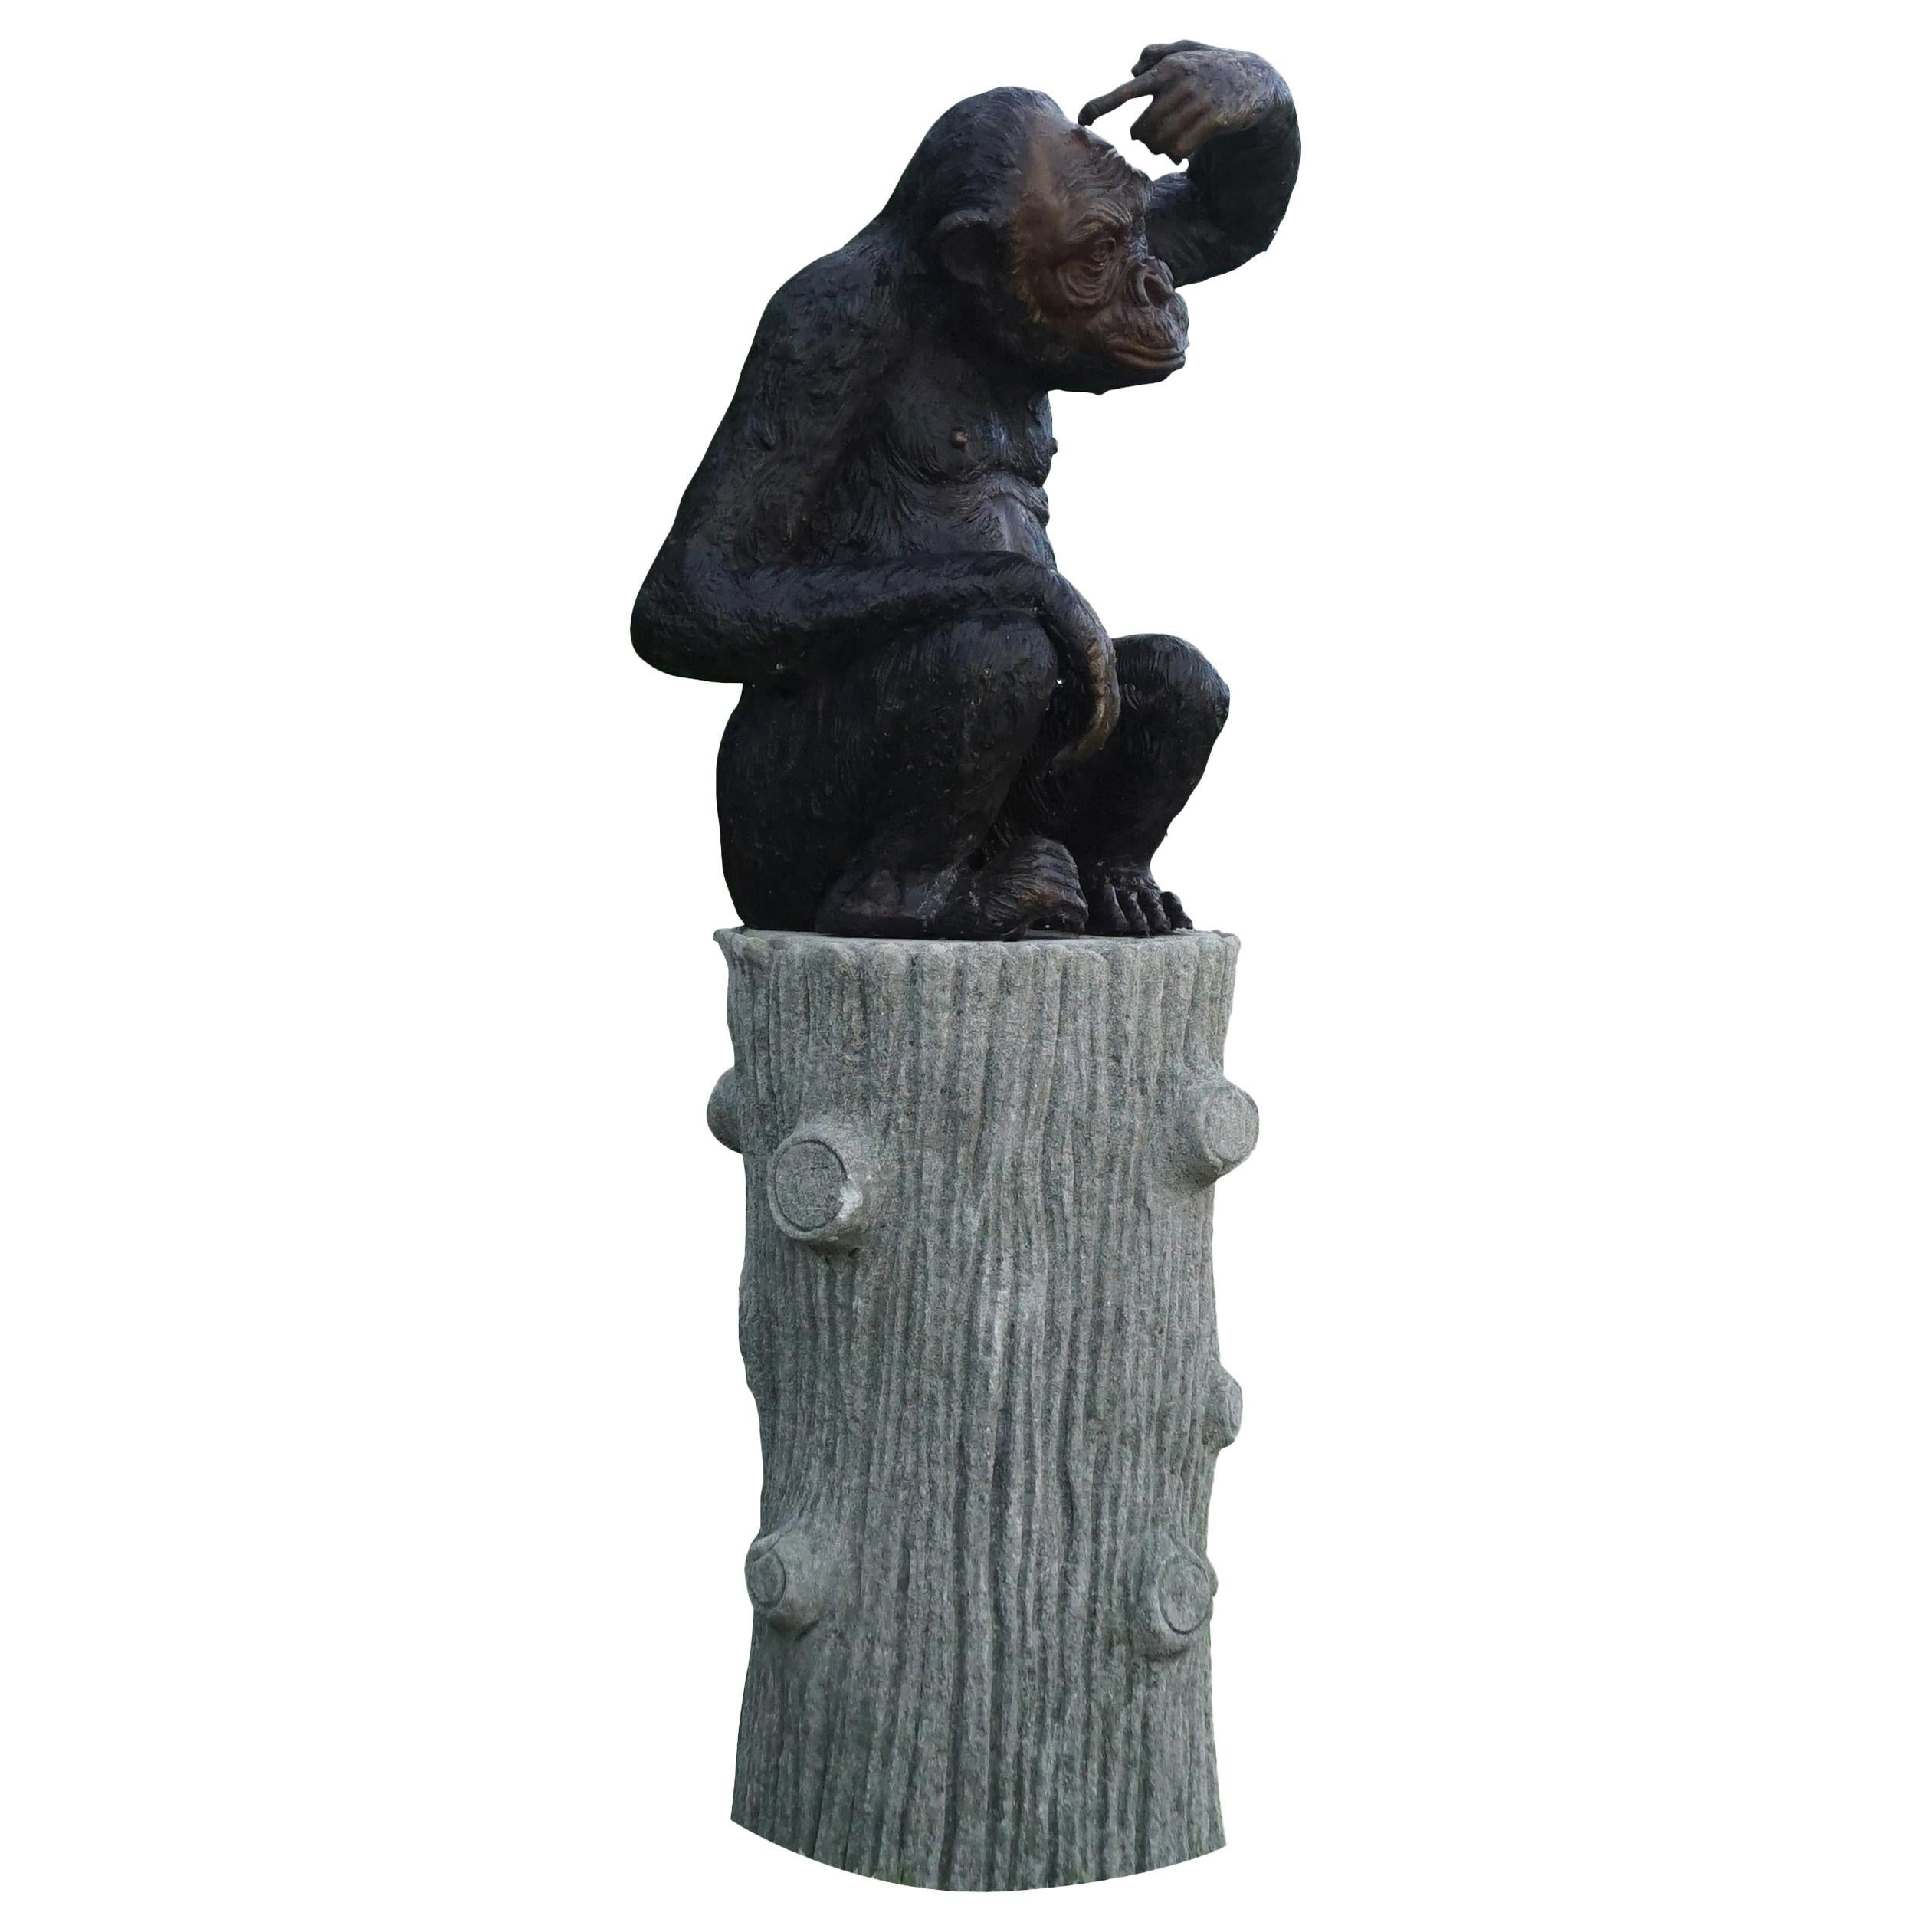 20th Century French Bronze Monkey Garden Statue on a Faux Bois Base